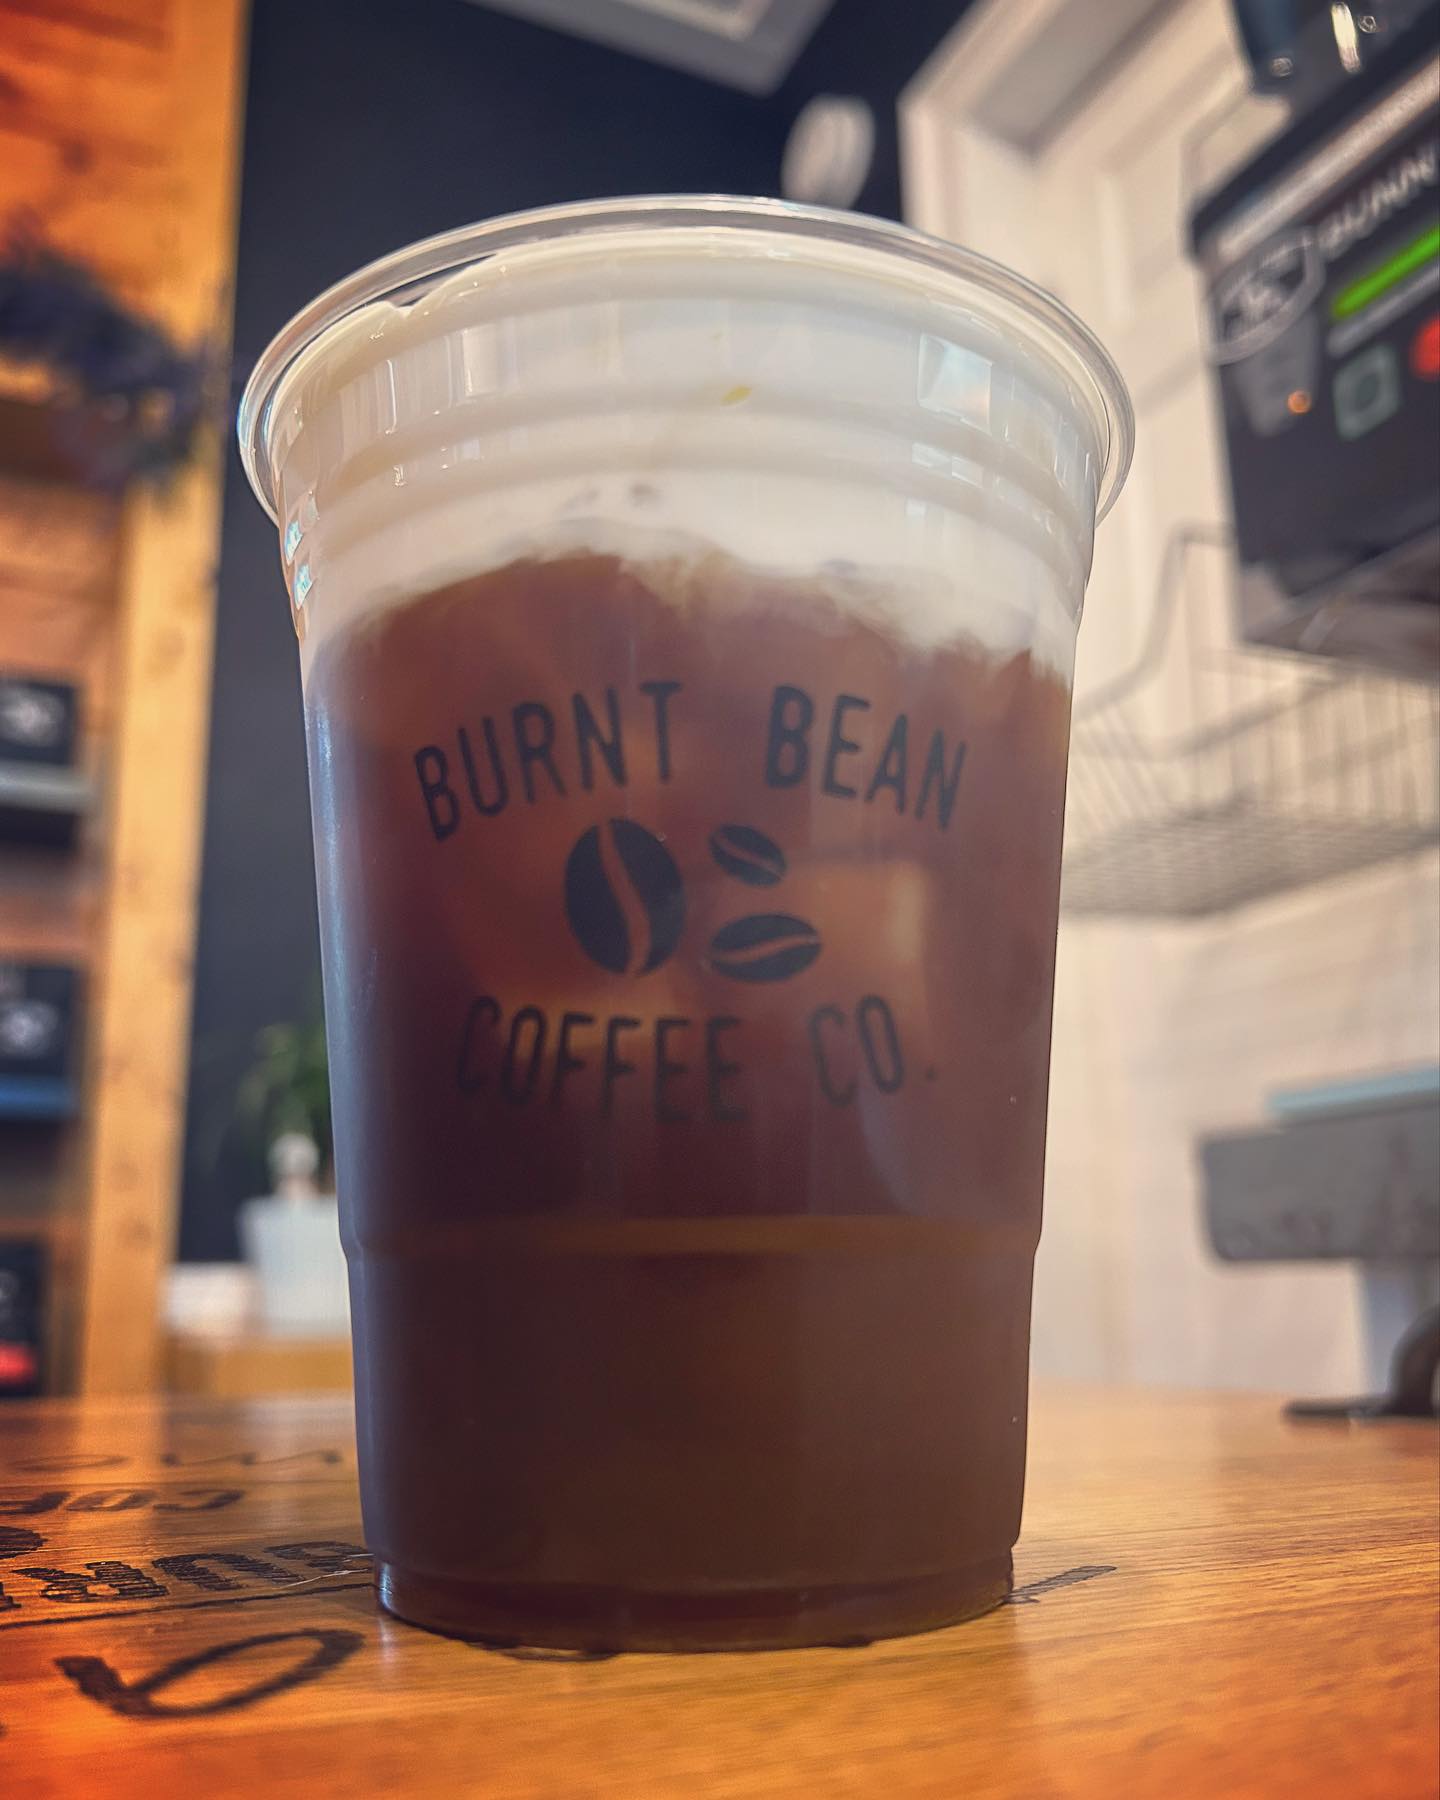 Burnt Bean Coffee Co.